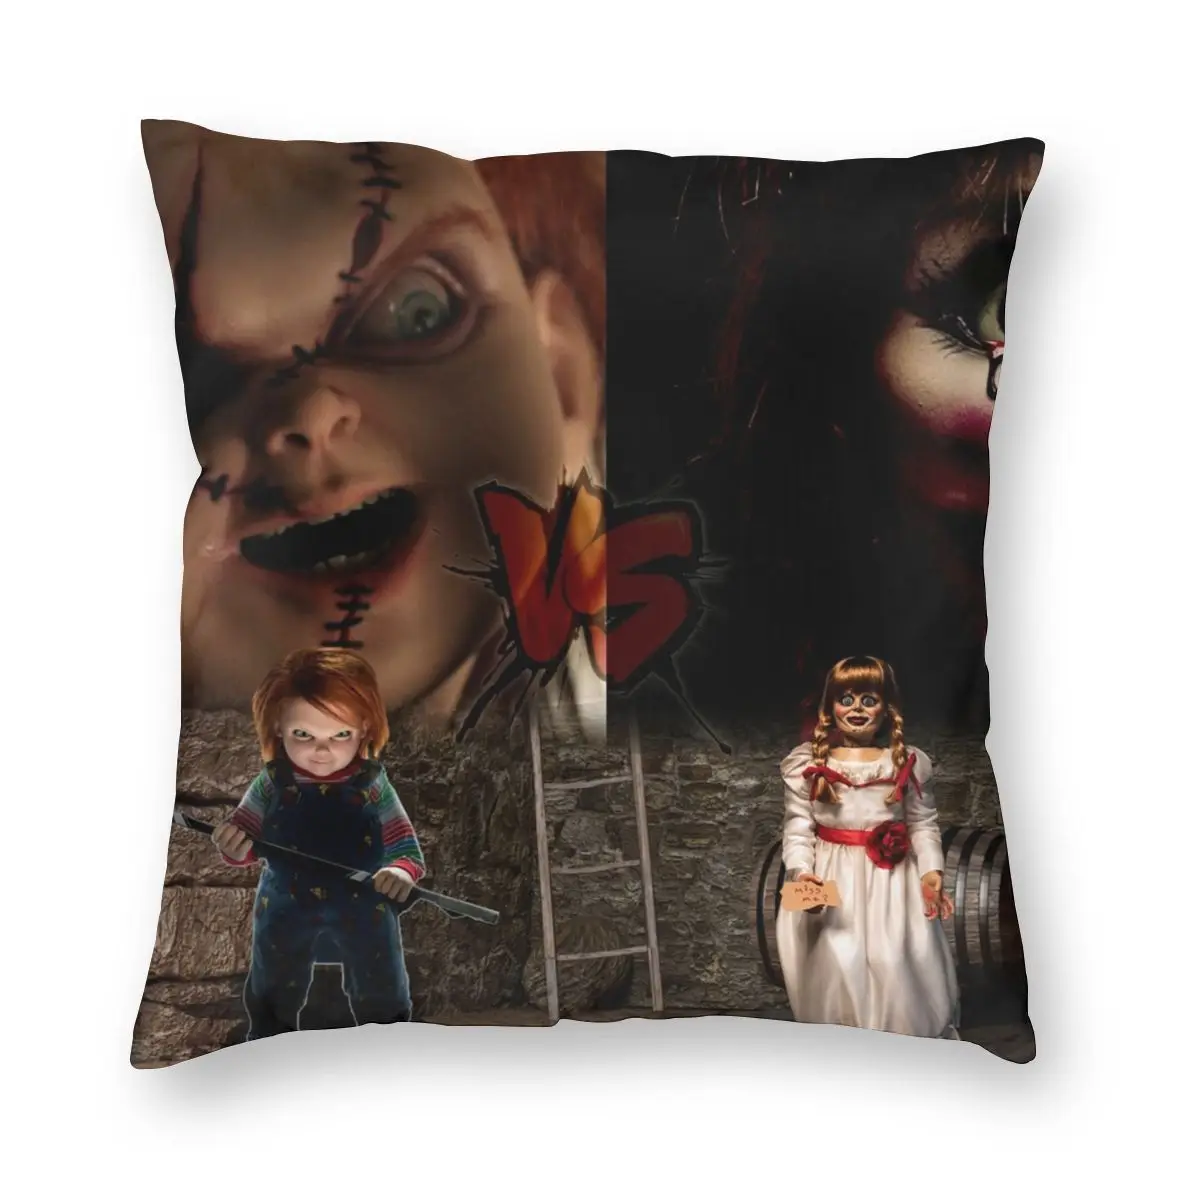 Chucky Vs Annabelle Horror Movie Theme Pillowcase Double-sided Printing Cushion Cover Decor Doll Throw Pillow Case Cover Home